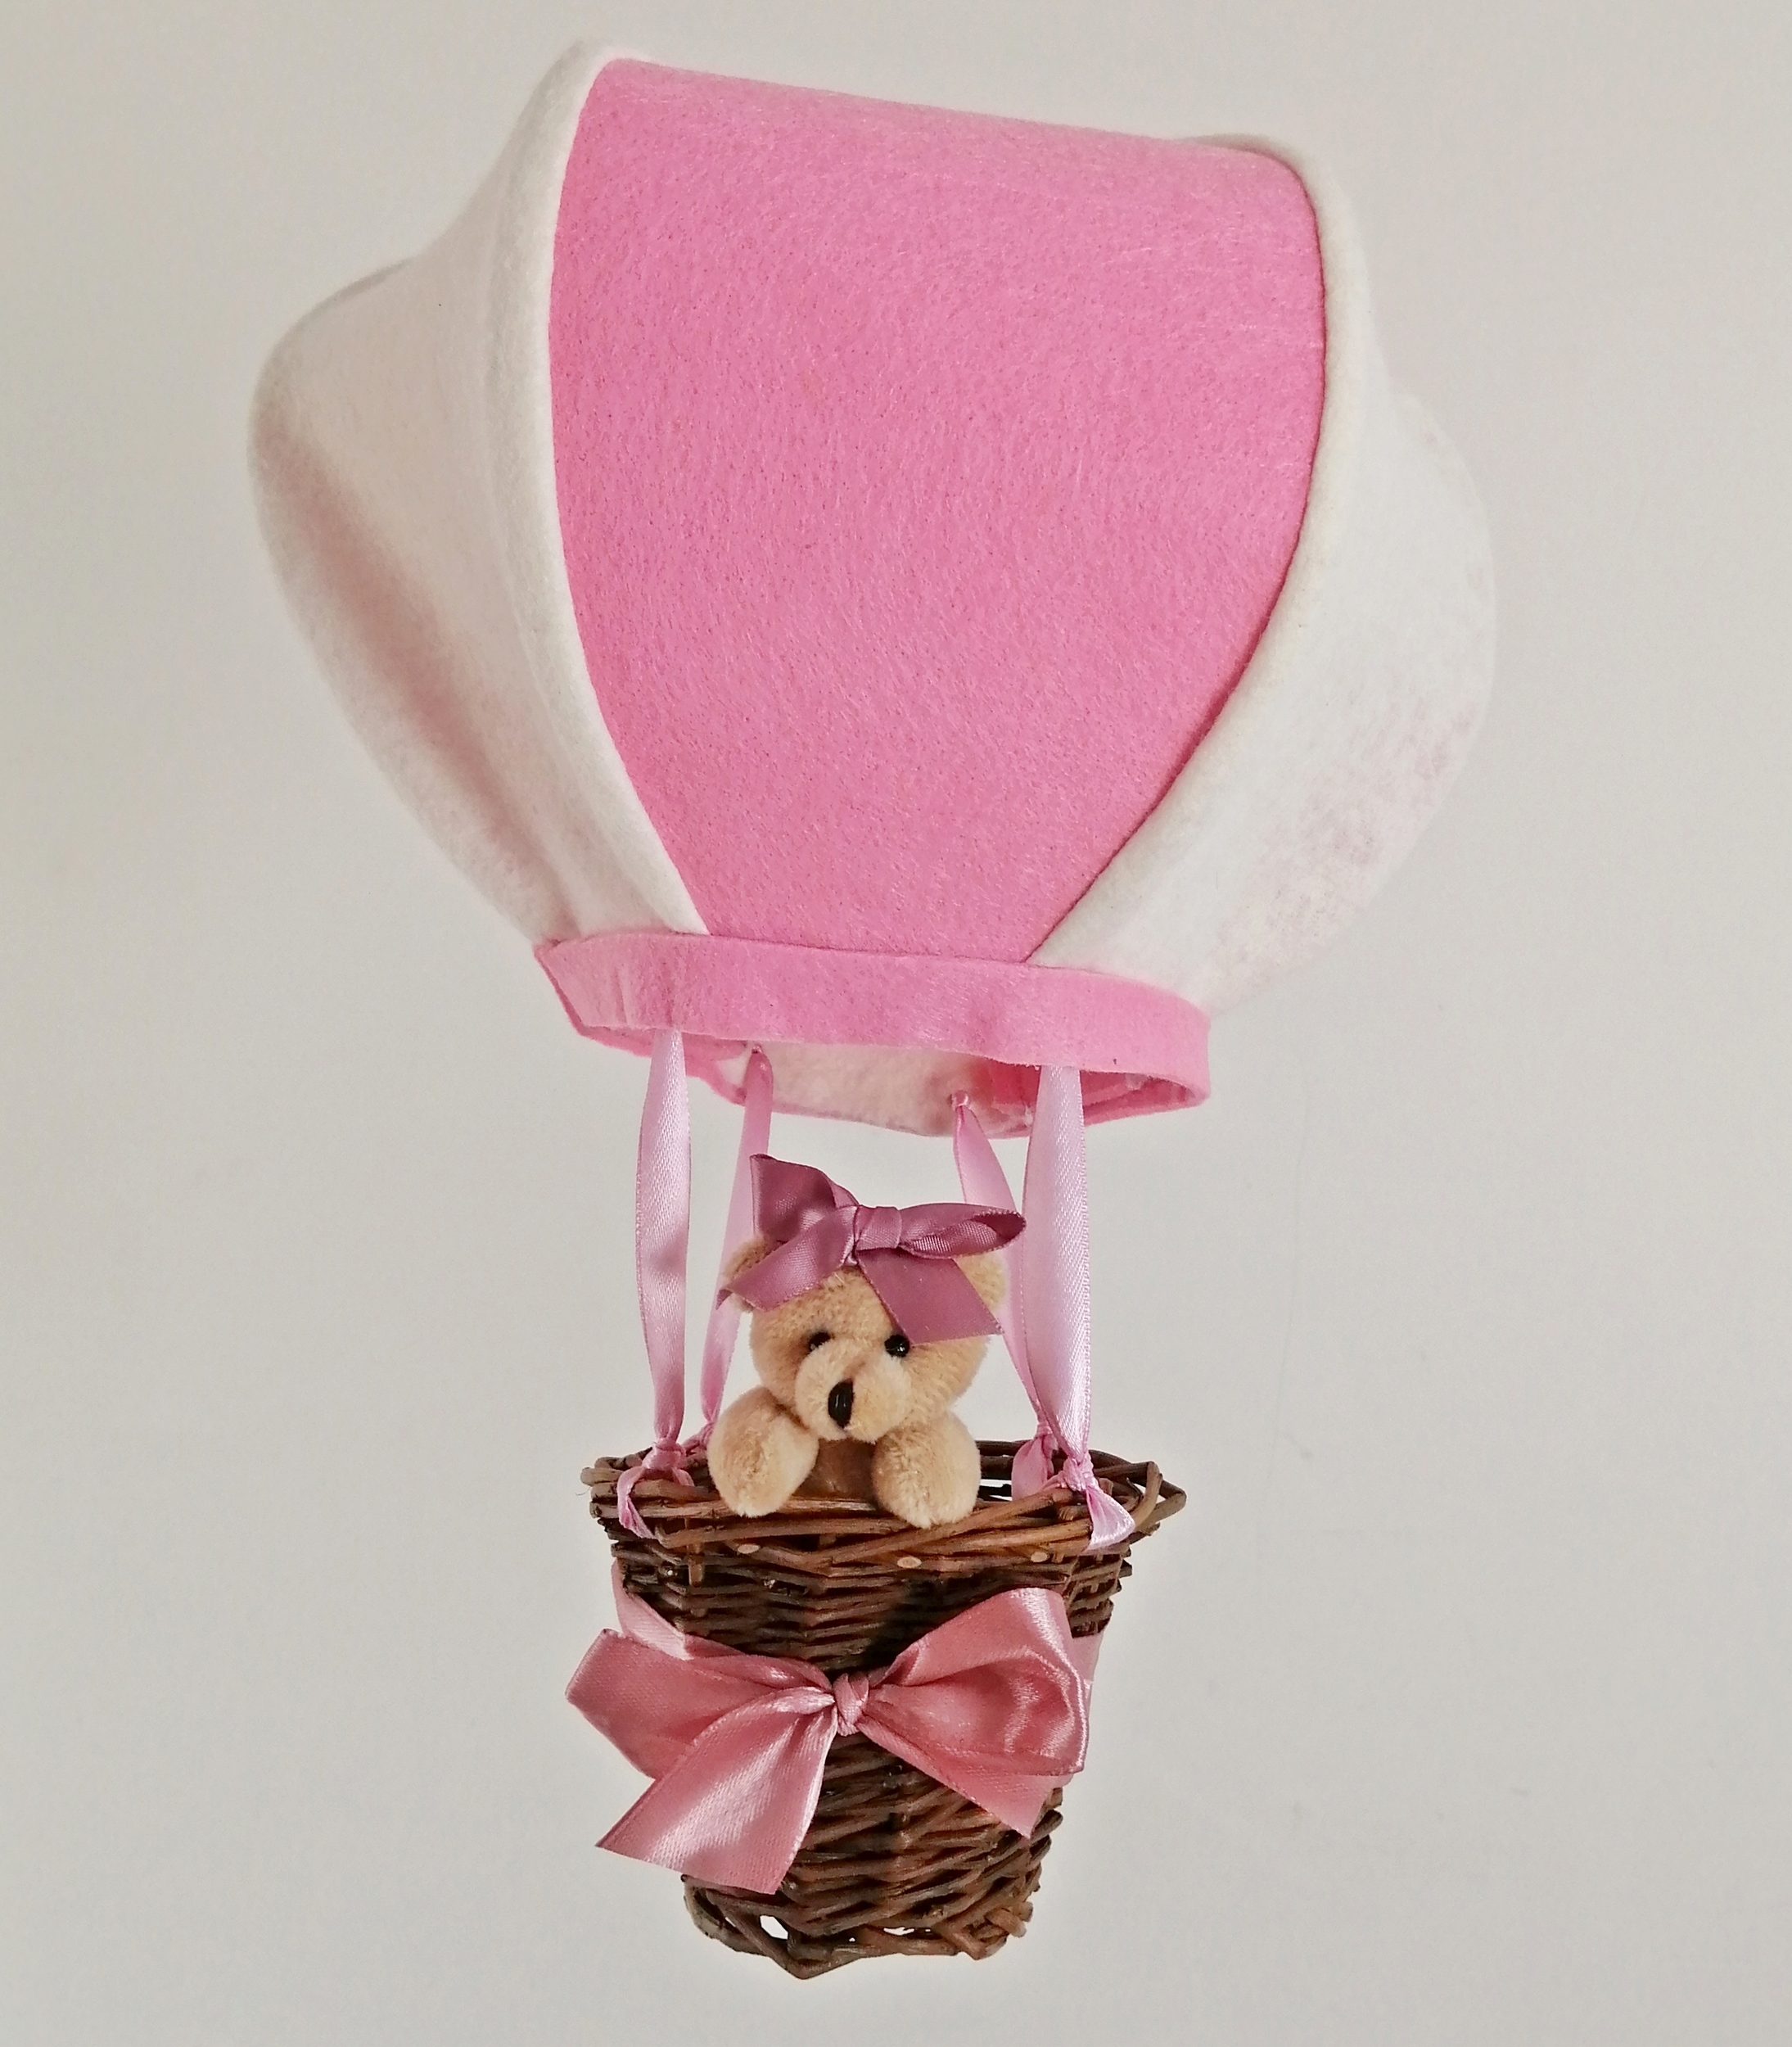 montgolfiere-decoration-enfant-bebe-suspension-mobile-rose-vieux-blanc-beige-fille